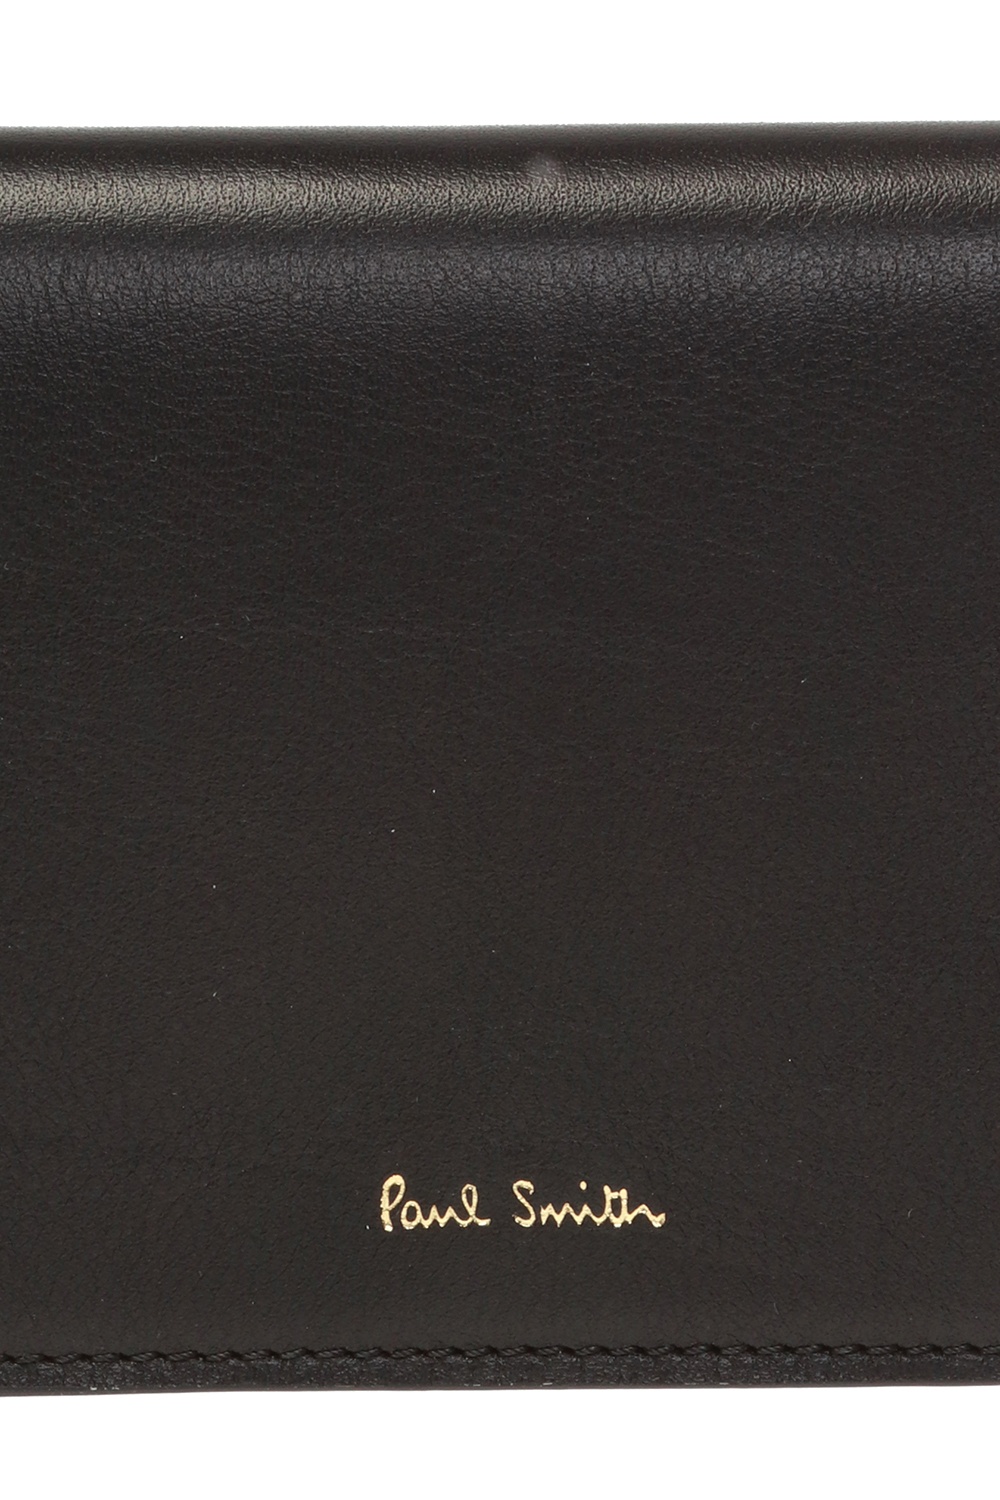 Paul Smith Logo wallet